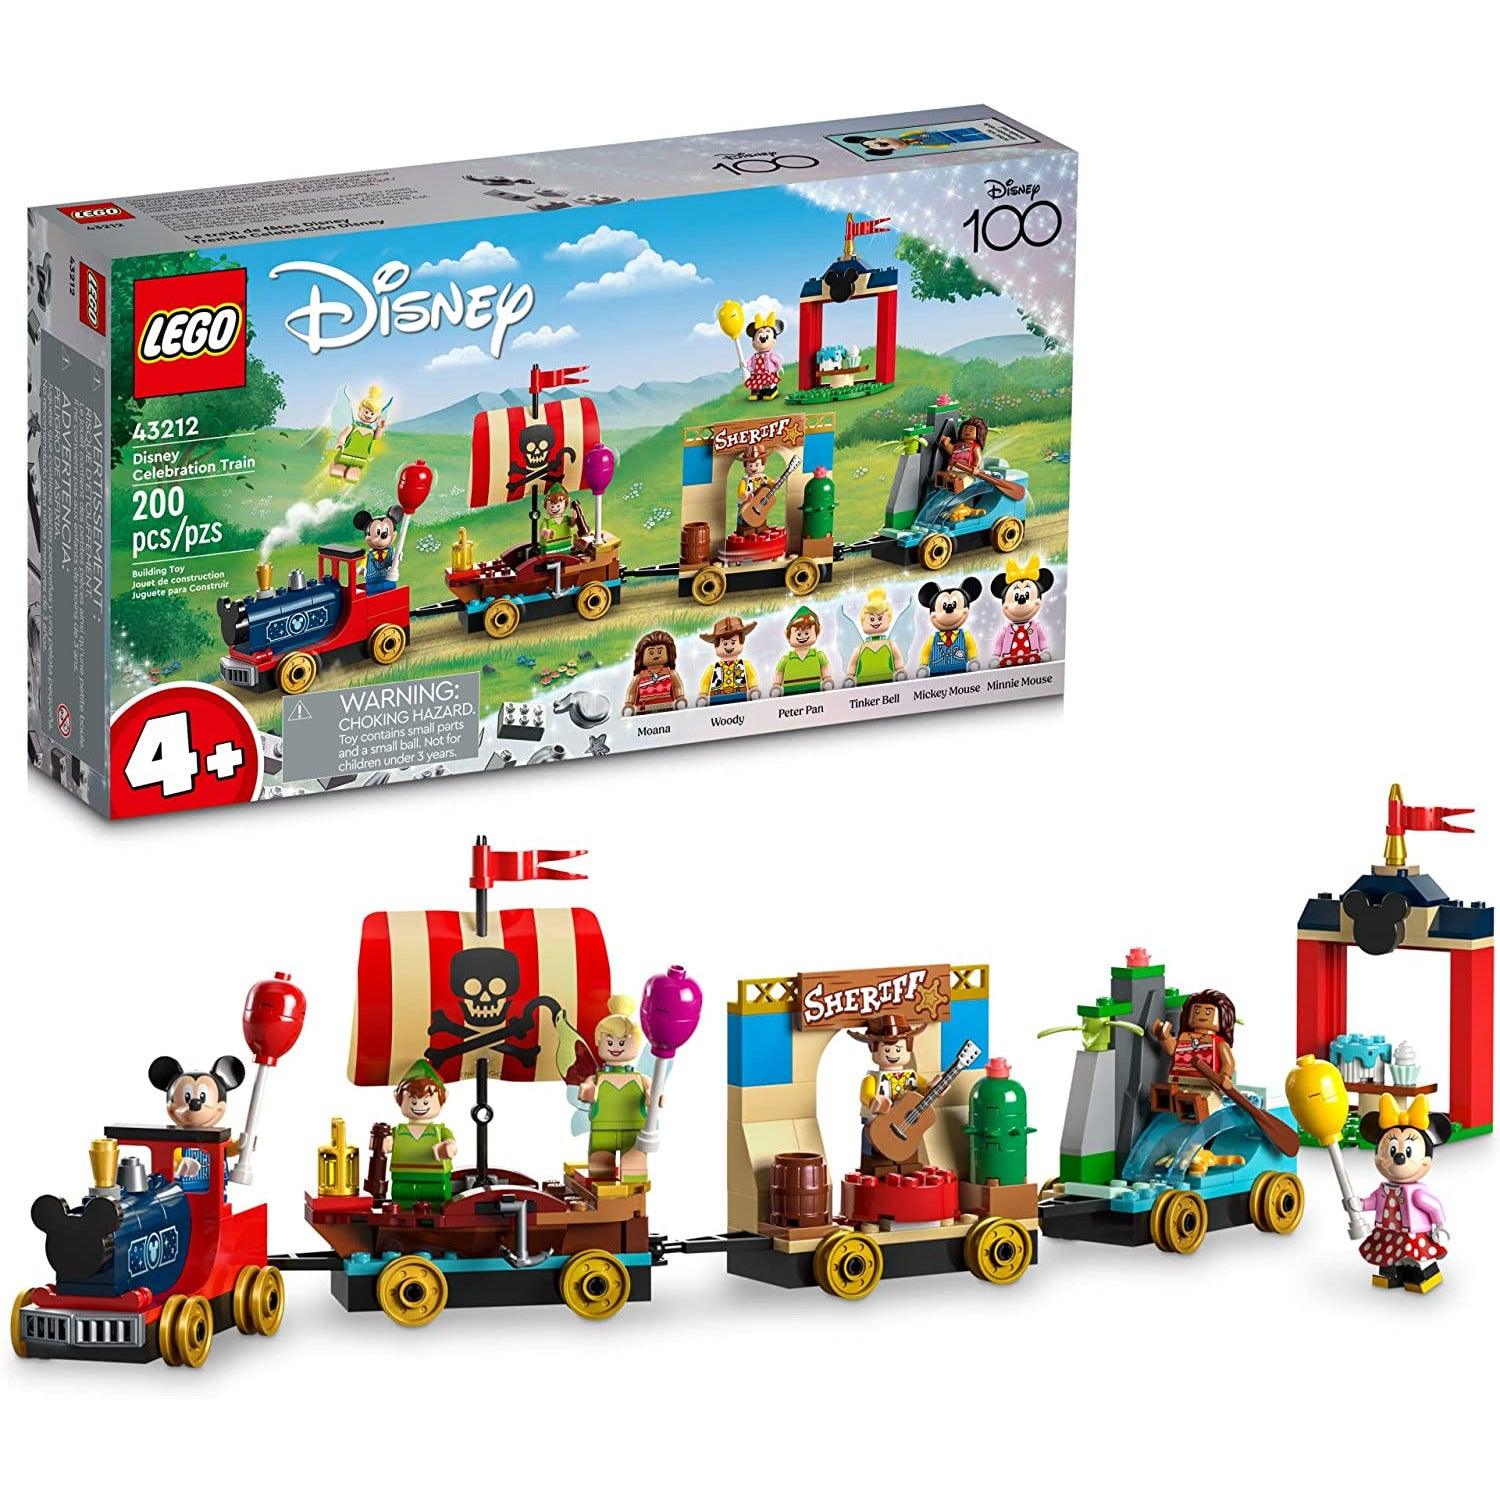 LEGO 43212 Disney 100 Celebration Train Building Toy (200 Pieces)